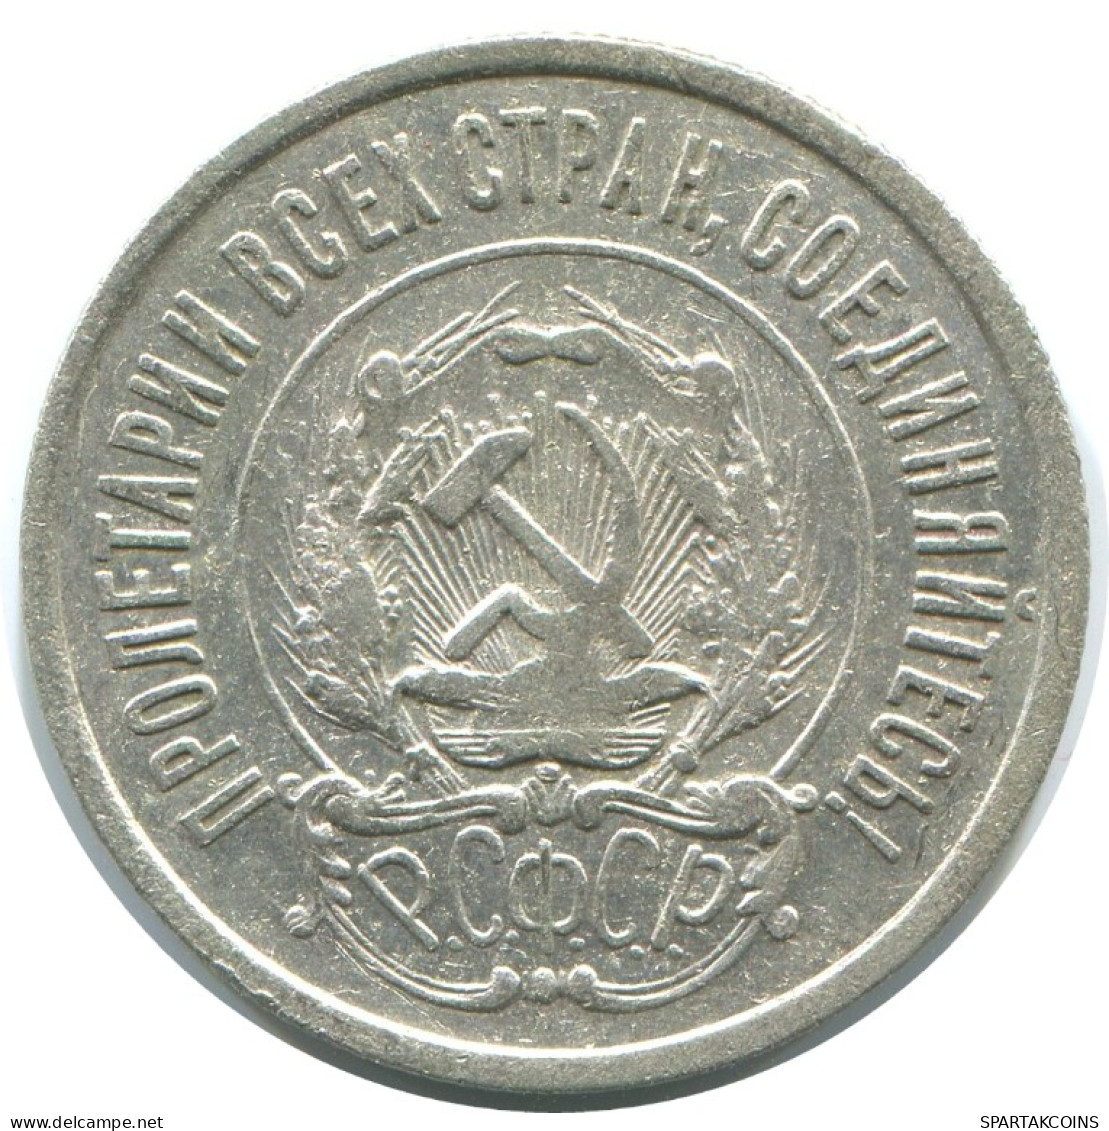 20 KOPEKS 1923 RUSIA RUSSIA RSFSR PLATA Moneda HIGH GRADE #AF387.4.E.A - Rusia